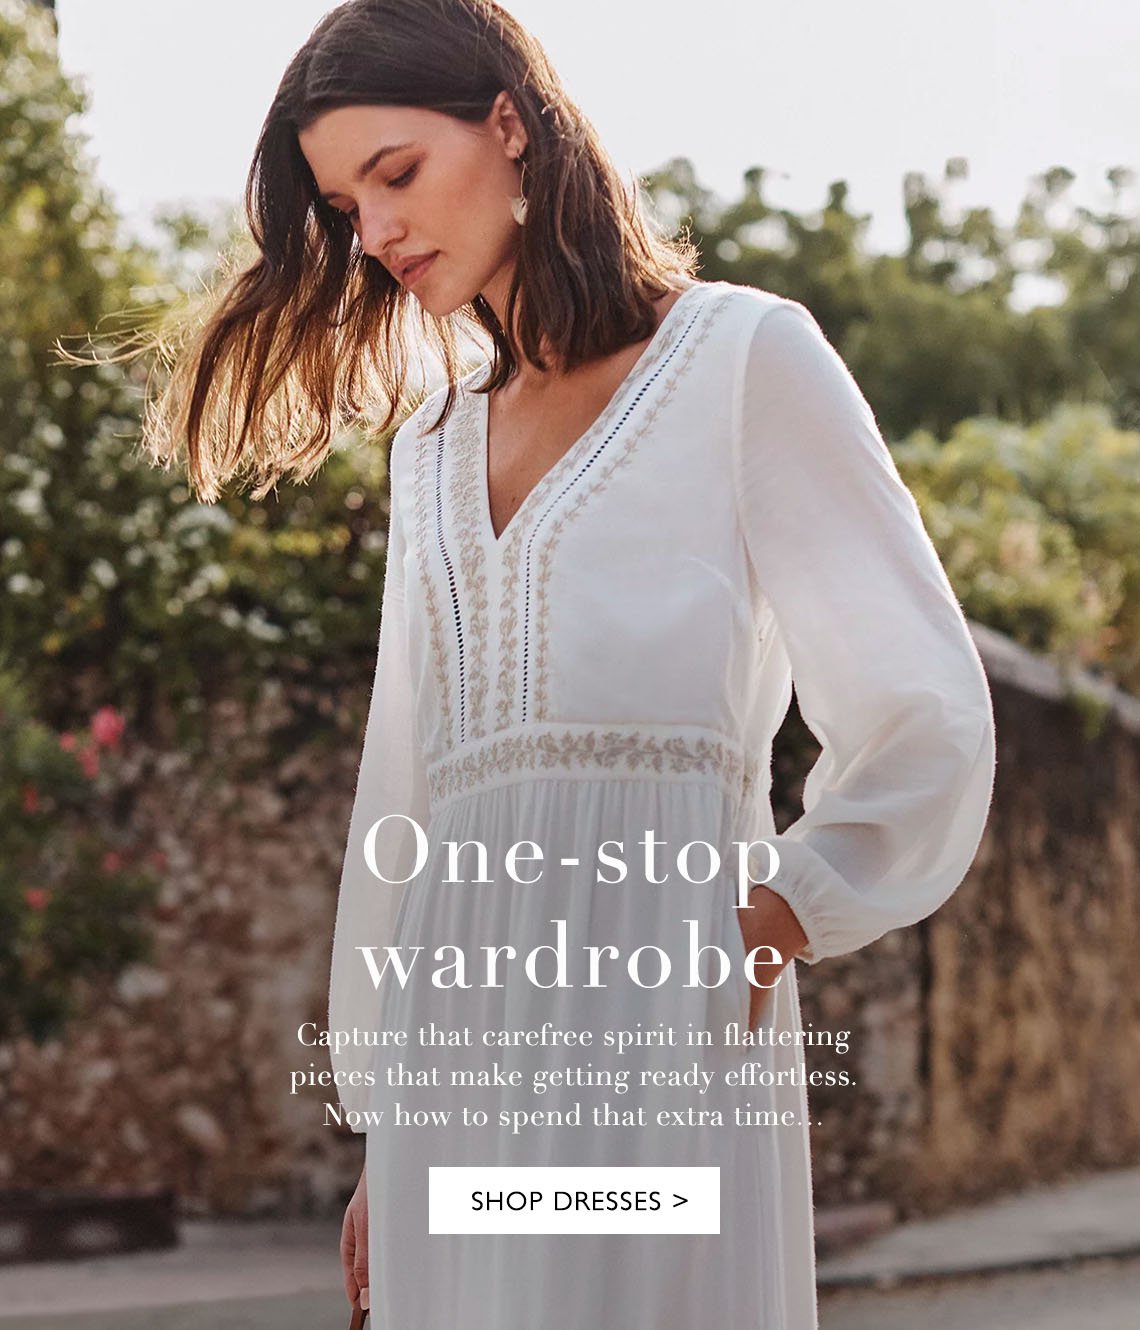 One-stop wardrobe | SHOP DRESSES